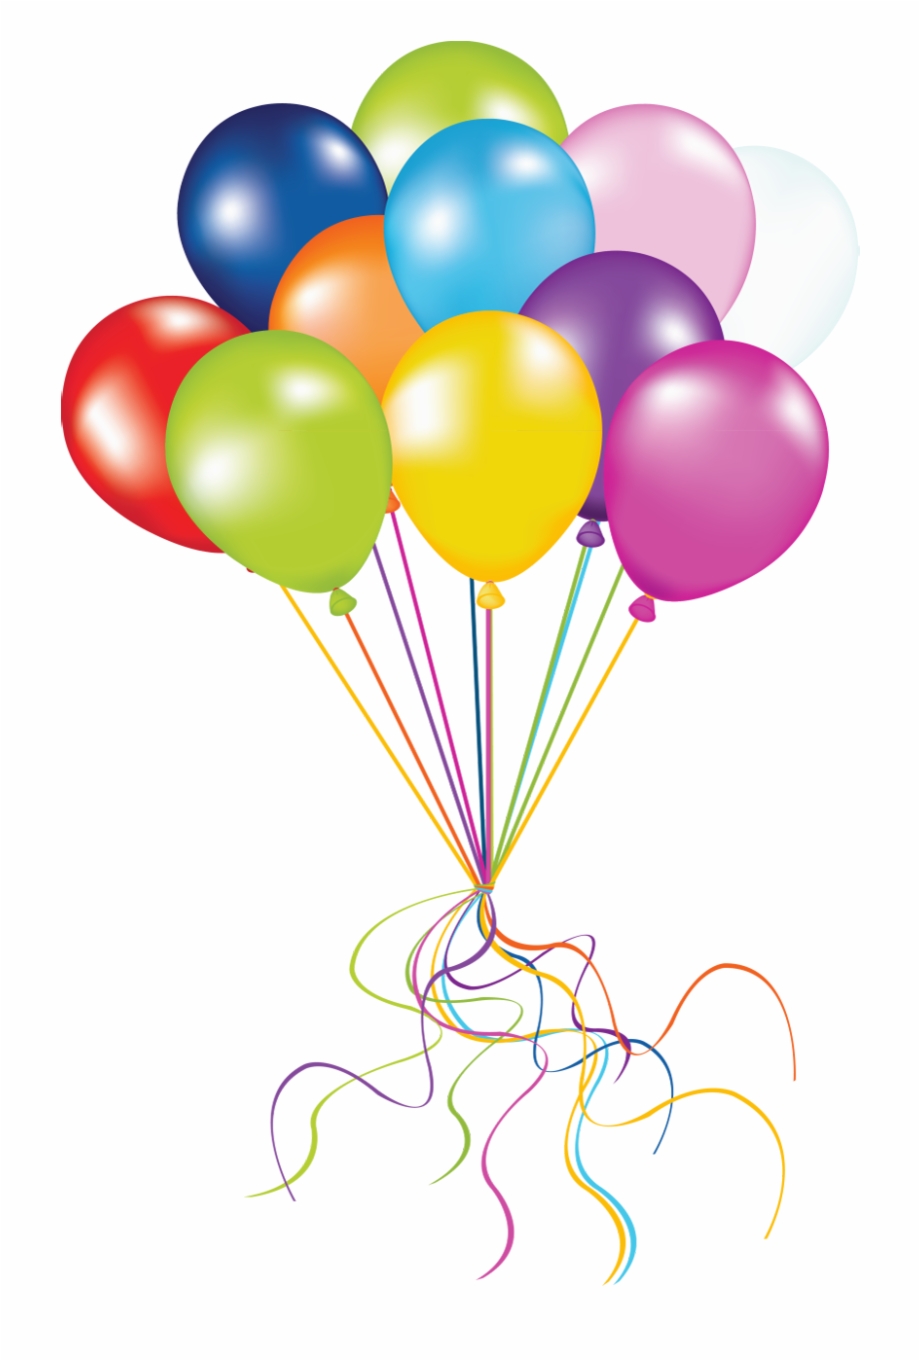 Free Birthday Balloons Transparent Background, Download Free Birthday